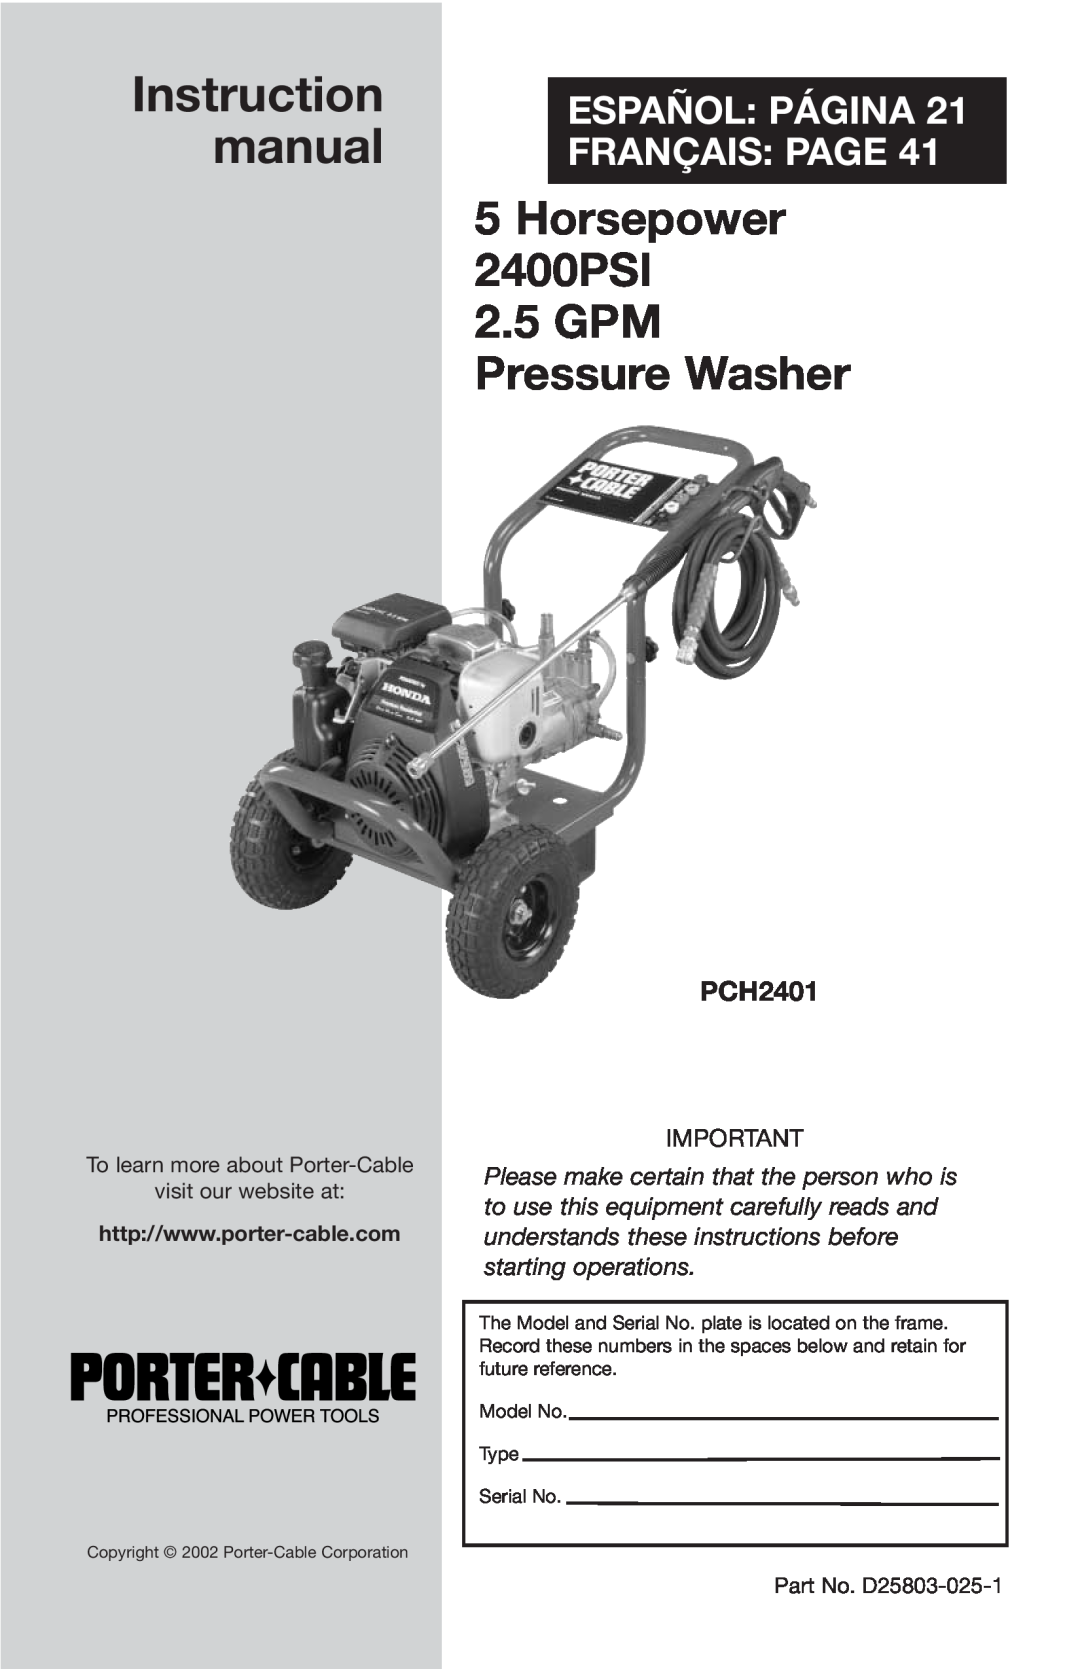 Porter-Cable D25803-025-1 instruction manual PCH2401, Instruction, Horsepower 2400PSI, GPM Pressure Washer, Español Página 